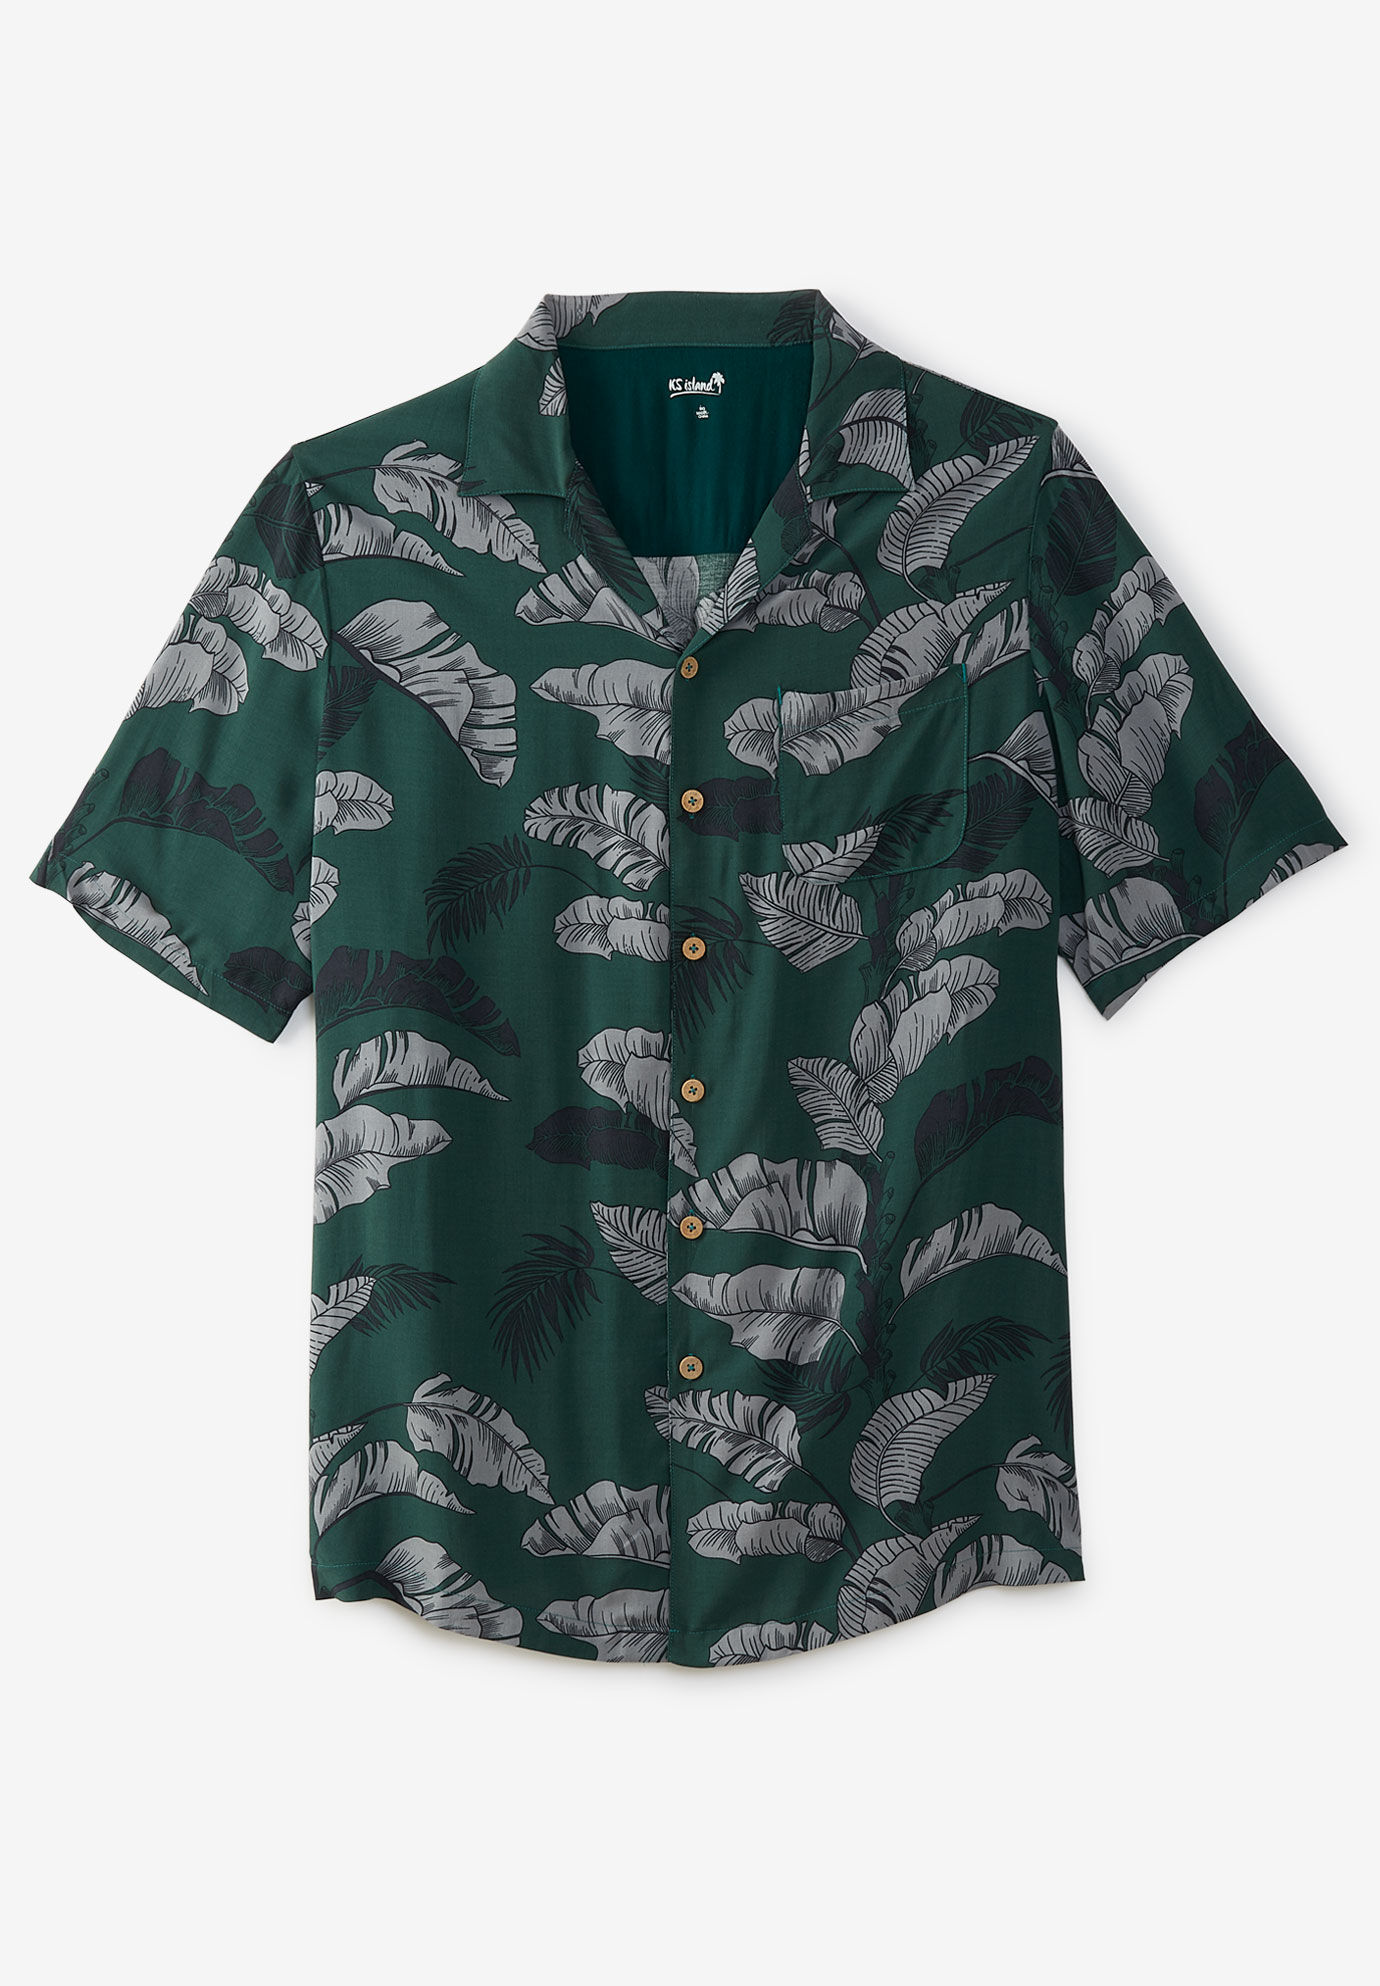 island shirts